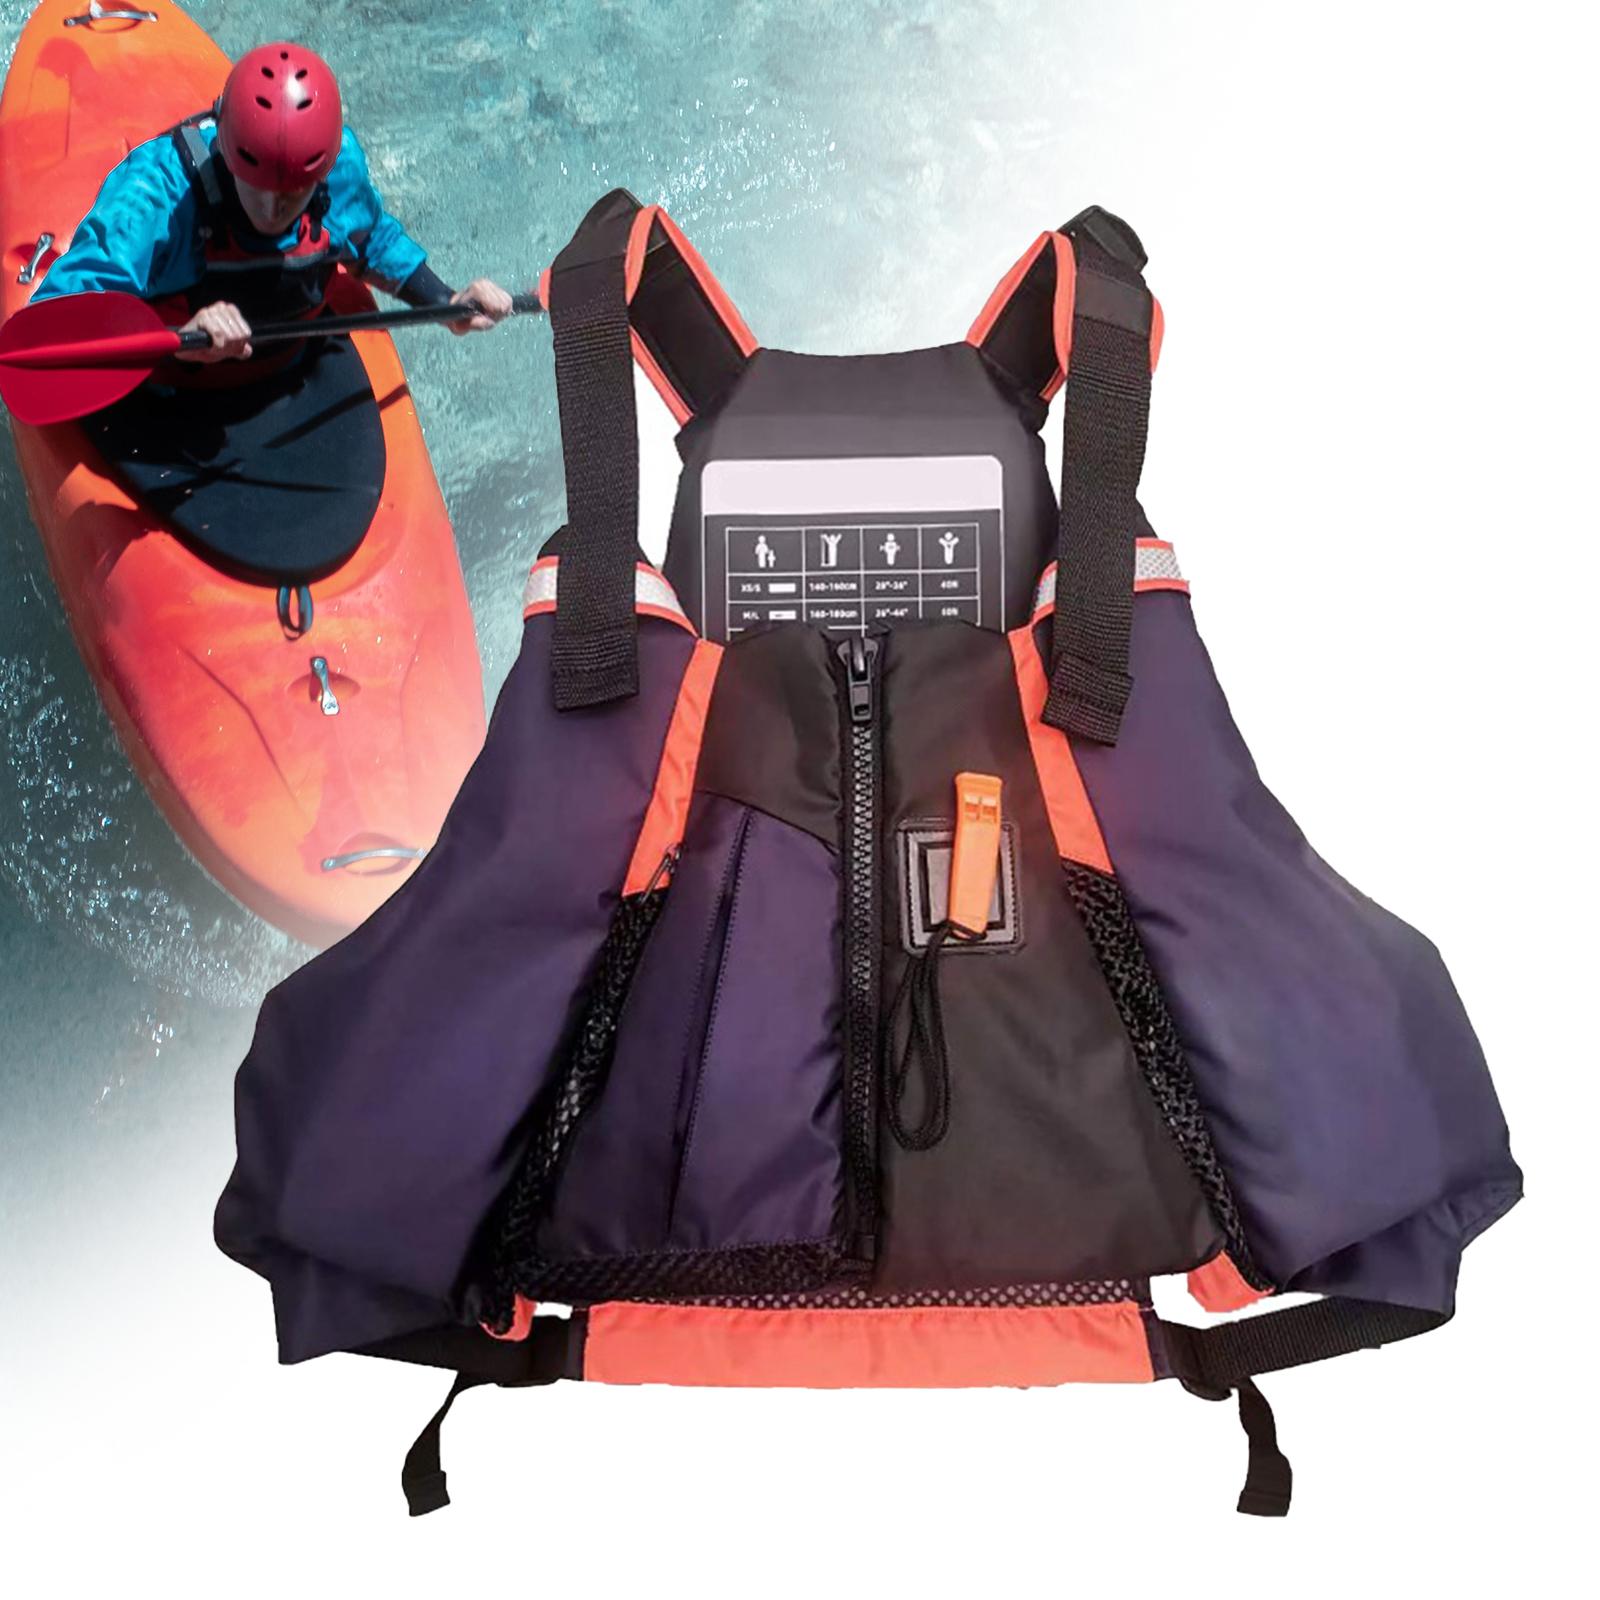 Kayak Life Jacket Swimming Vest Waterproof Portable Breathable Survival Suit M L Navy Blue Purple